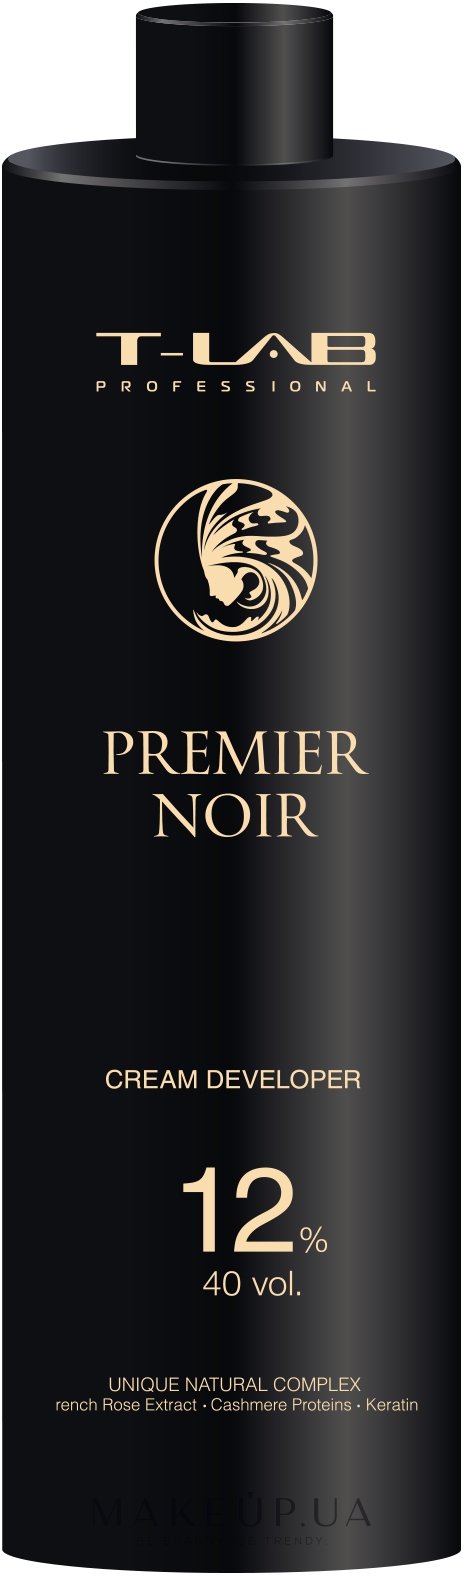 Крем-проявитель 12% - T-LAB Professional Premier Noir Cream Developer 40 vol. 12% — фото 1000ml